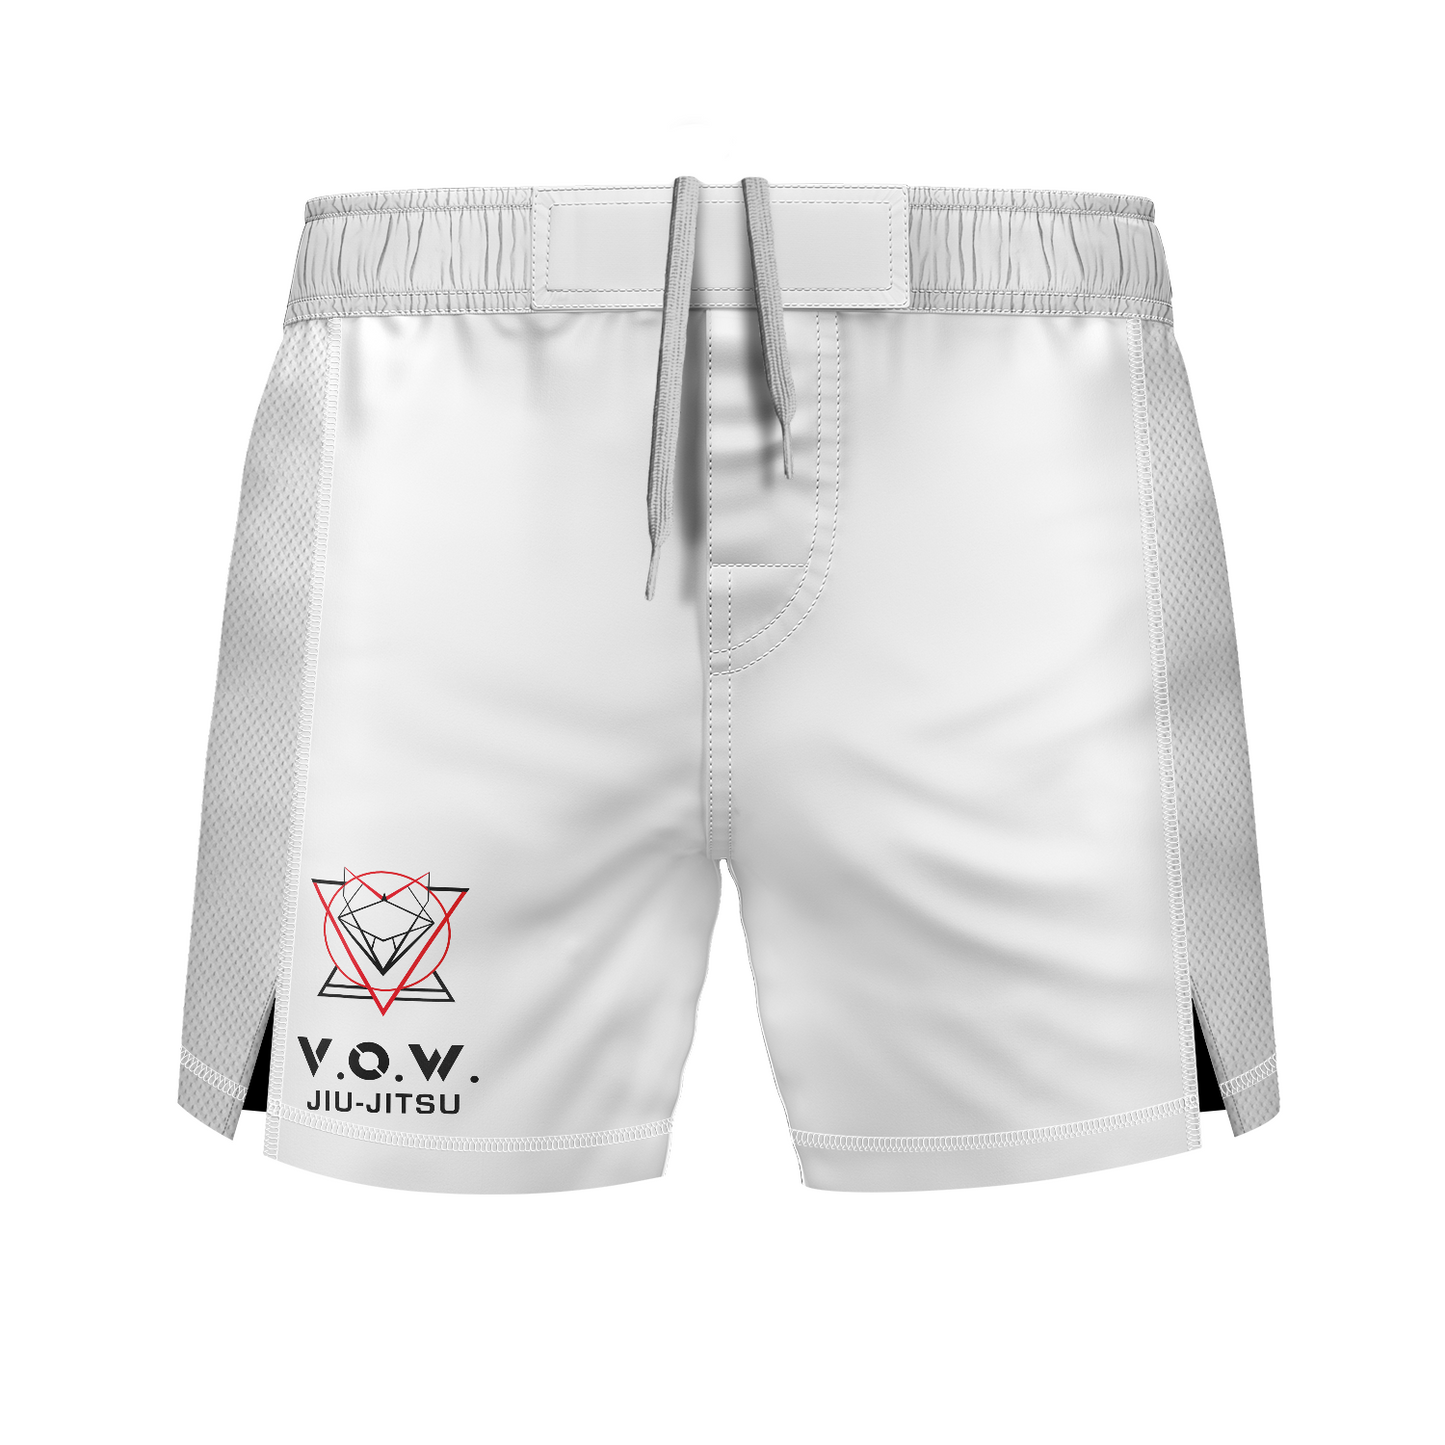 VOW JJ men's fight shorts Standard Issue, white